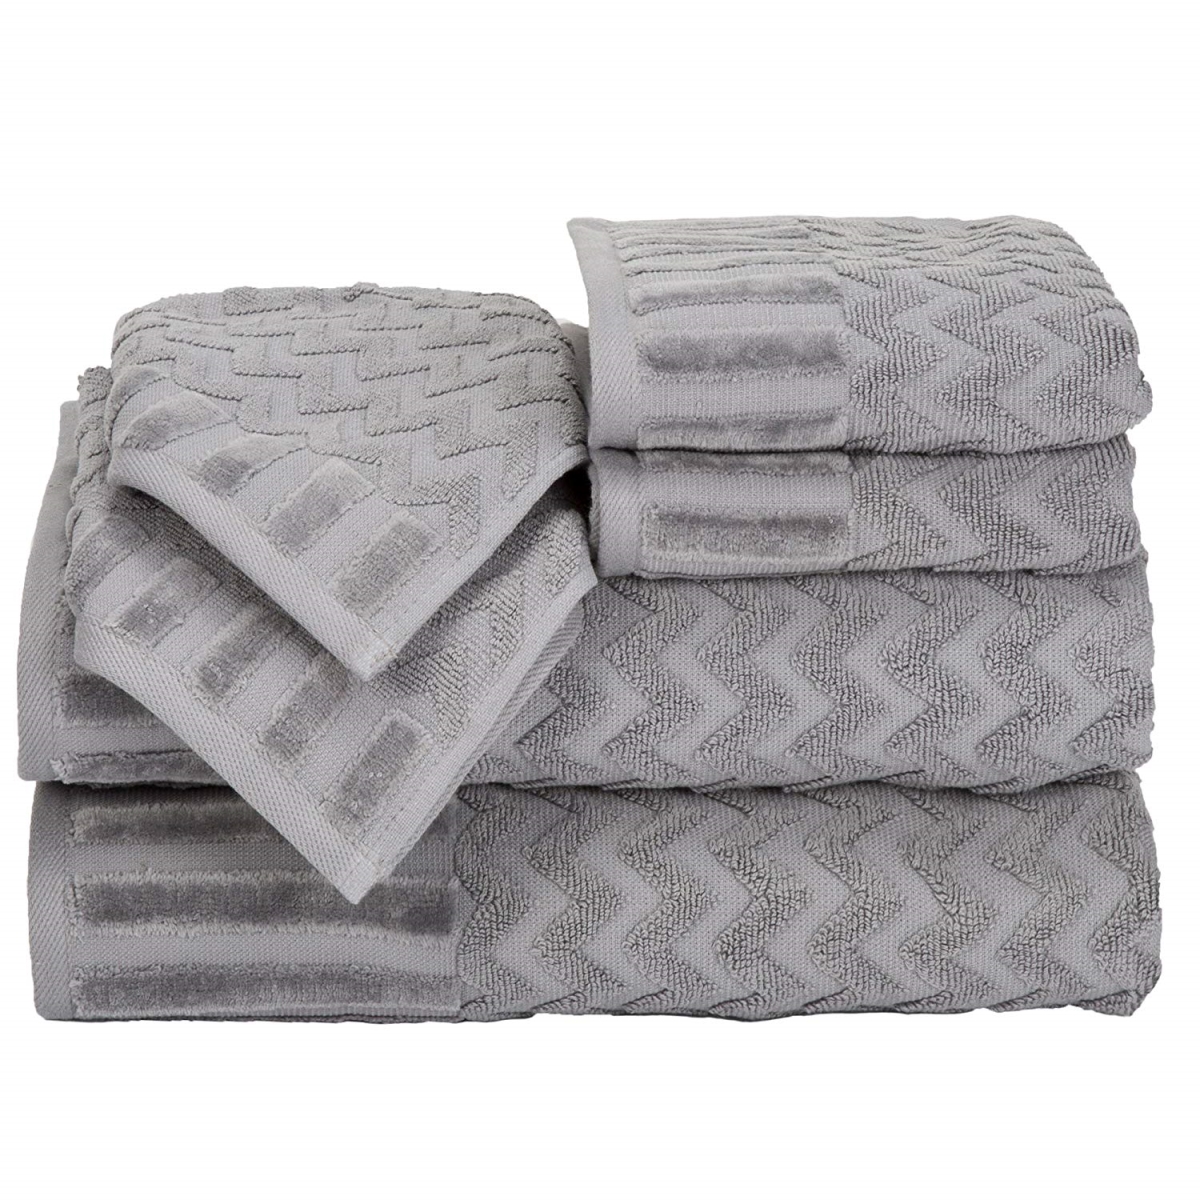 Picture of Bedford Home 67A-27605 6 Piece Cotton Deluxe Plush Bath Towel Set - Silver